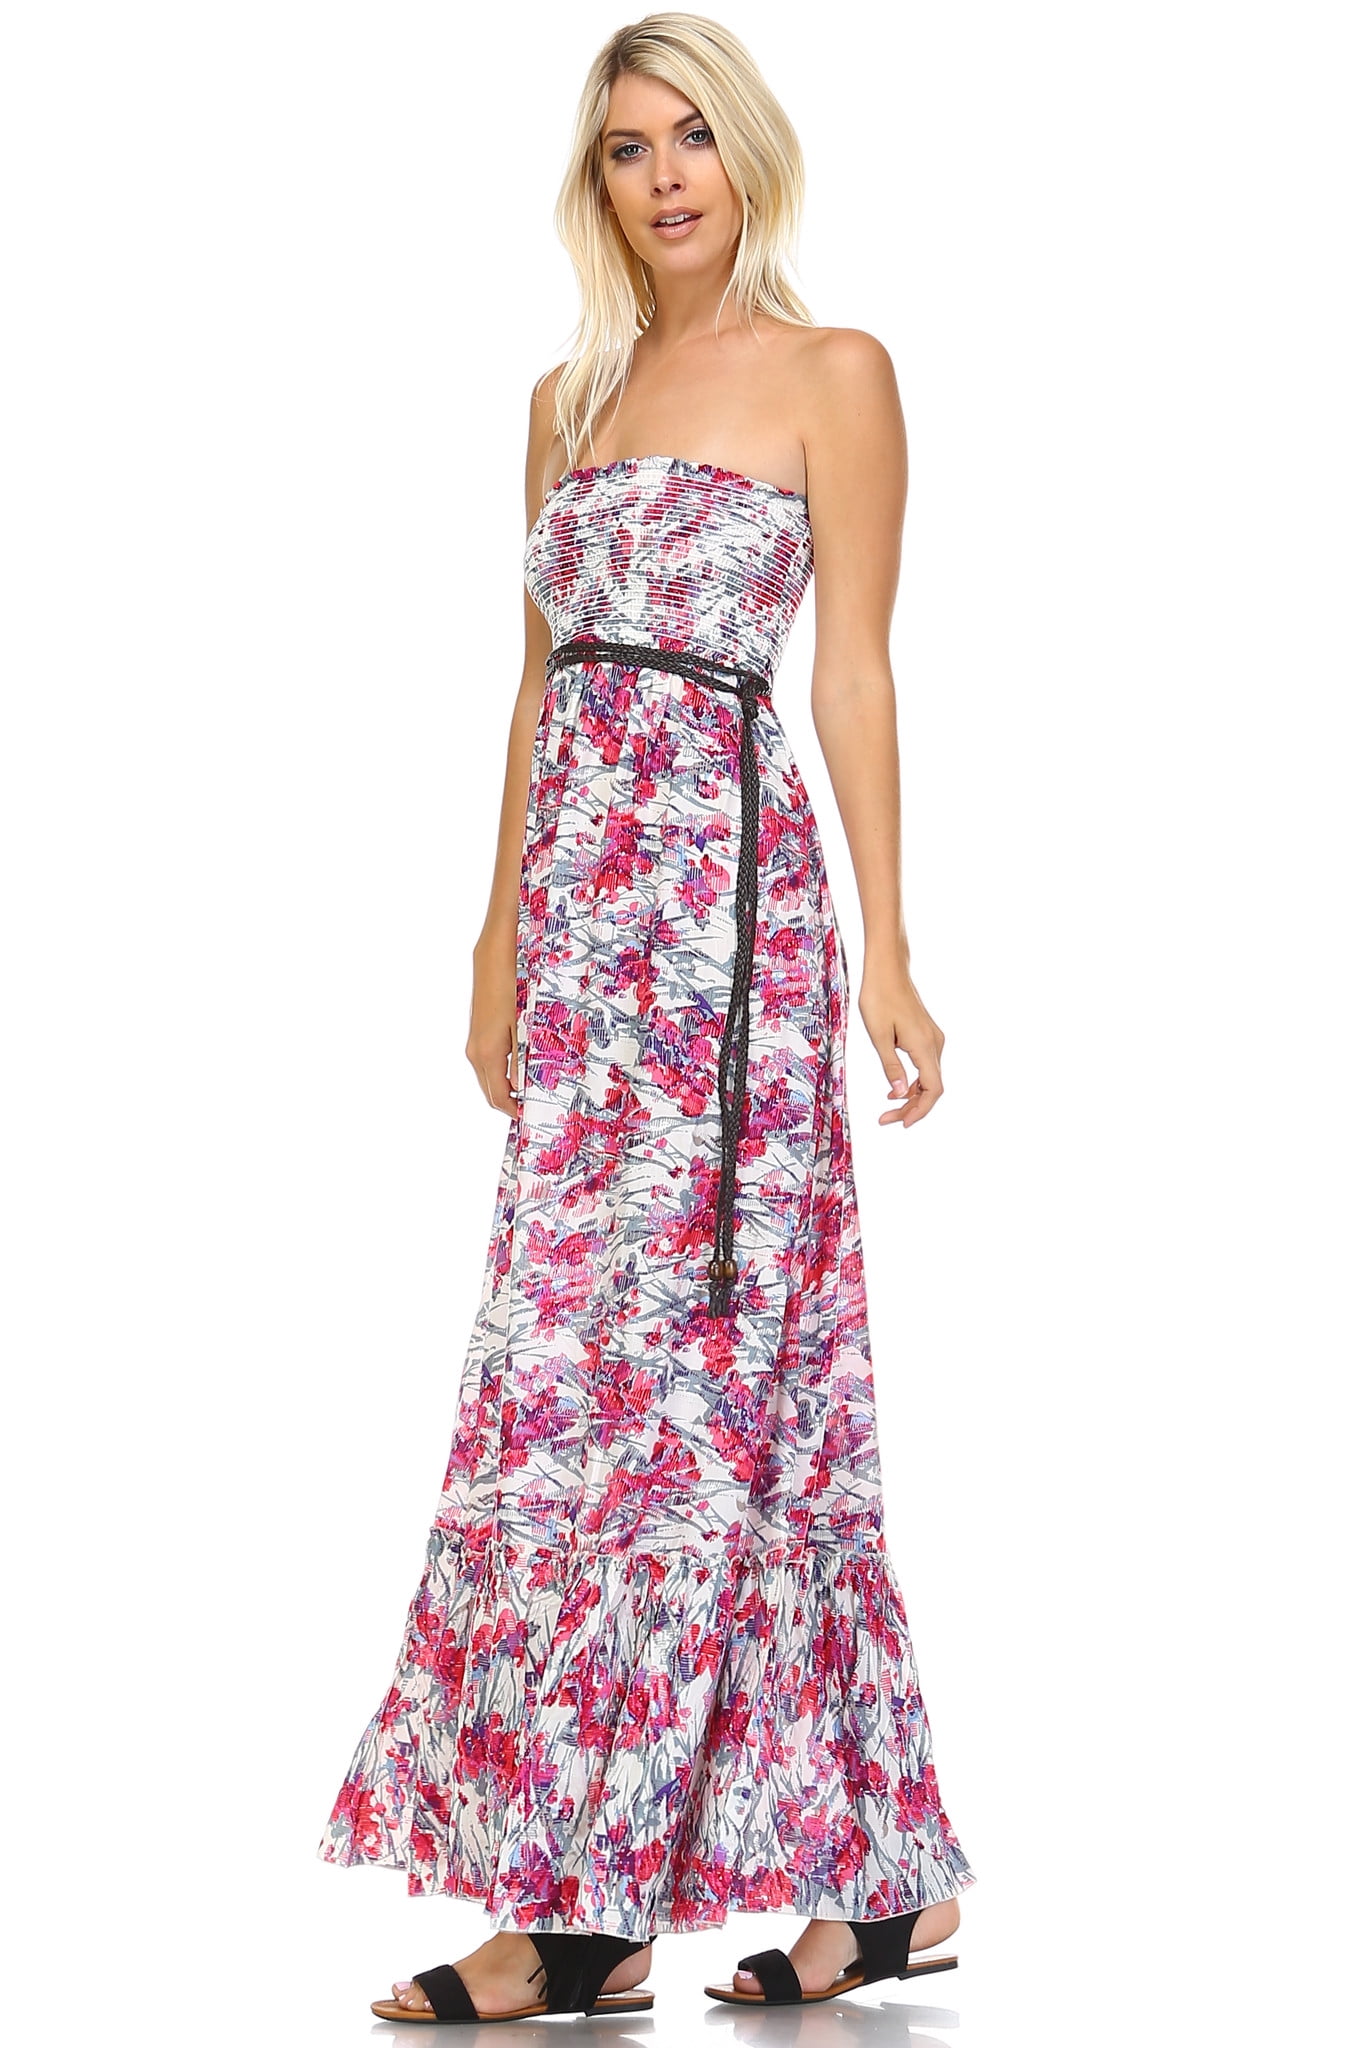 Marcelle Margaux Printed Strapless Smocked Maxi Dress w/Belt - Walmart.com